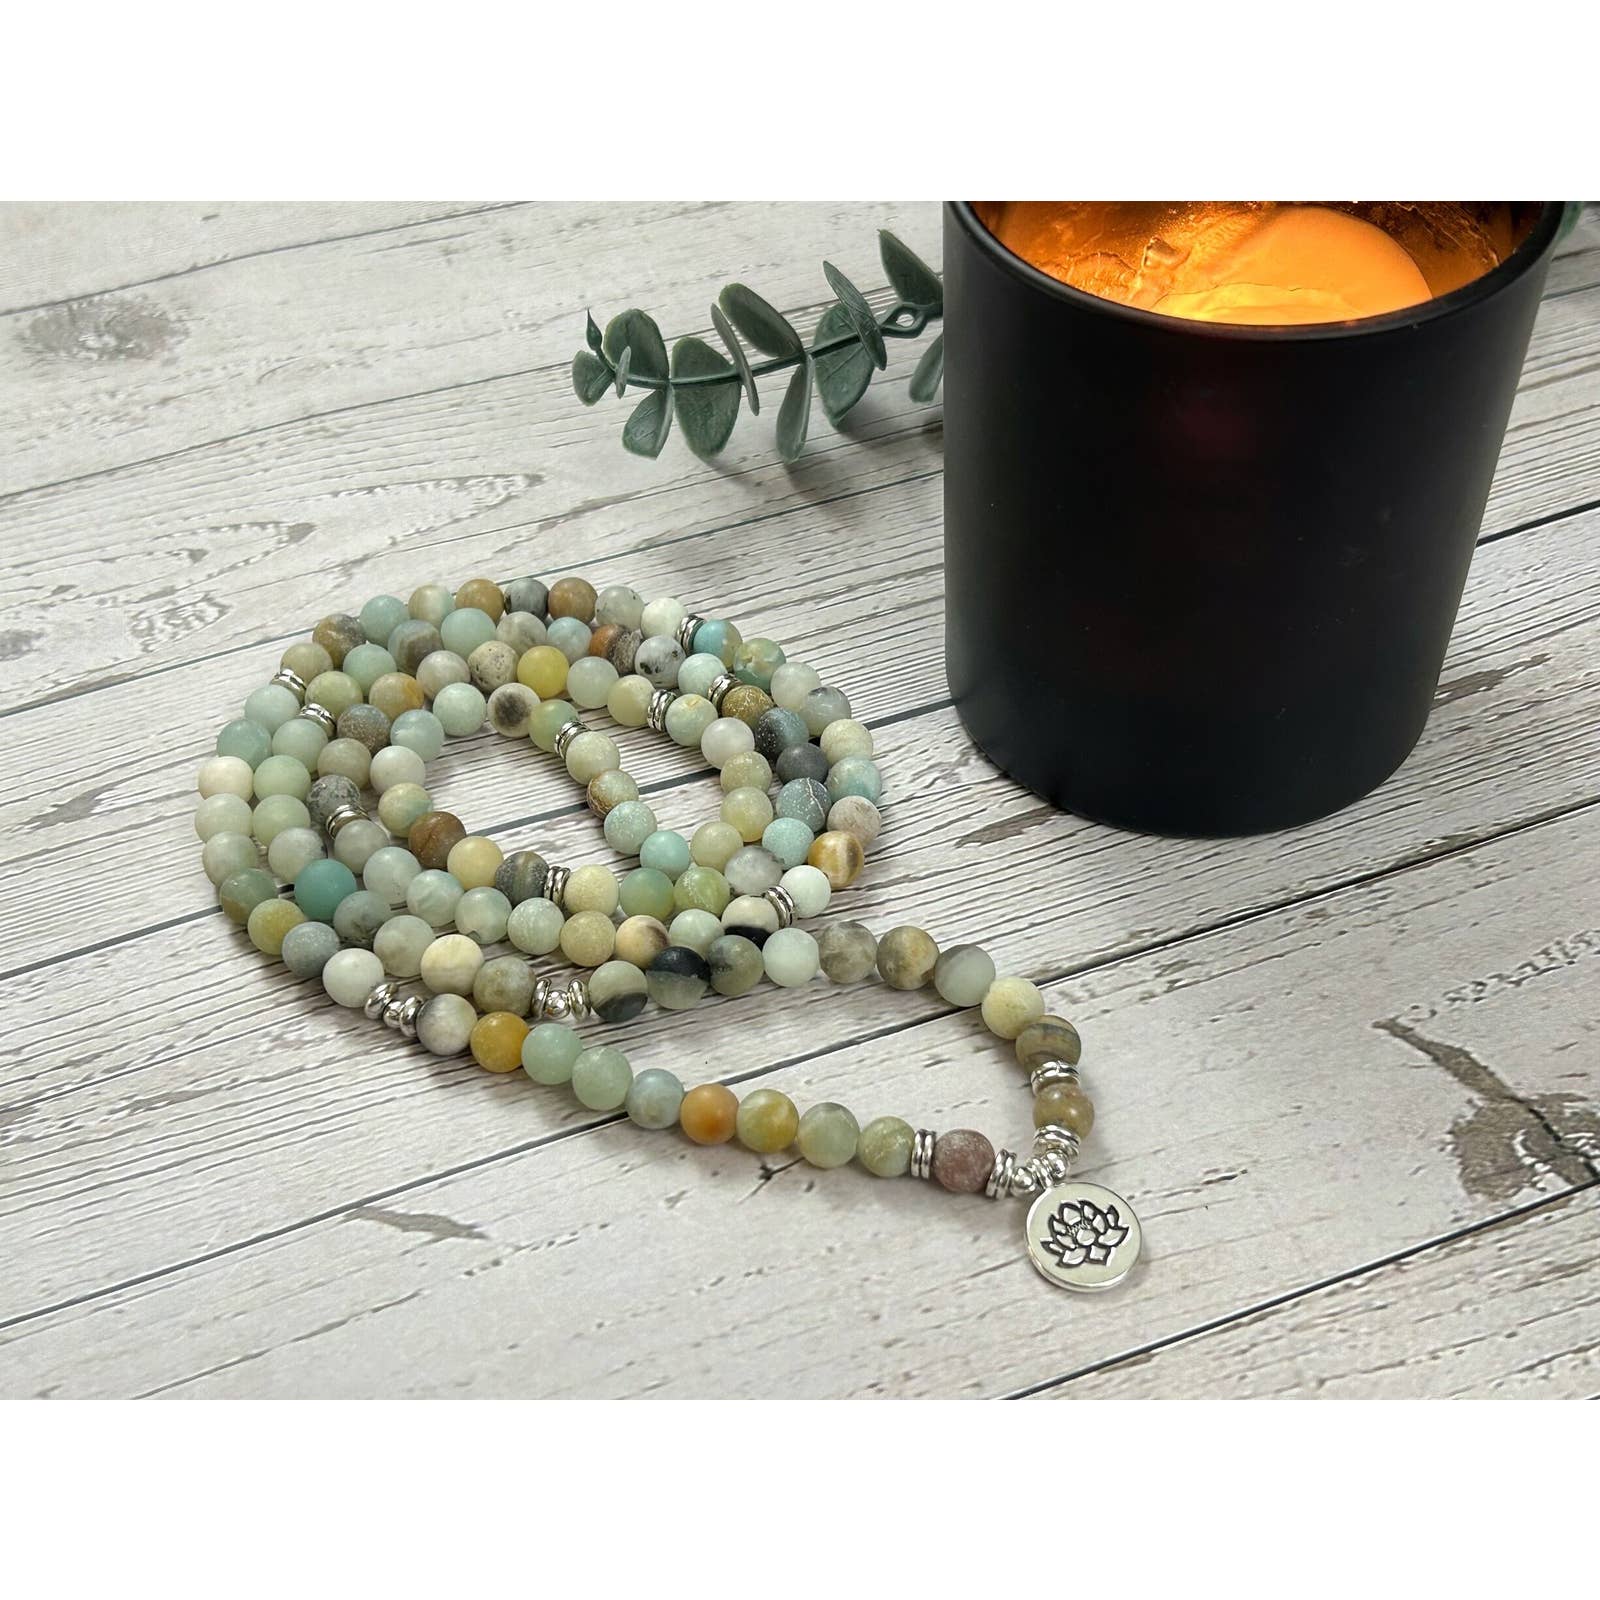 108 Mala Beads Necklace - Amazonite Necklace Prayer Beads - 108 Mala Beads Bracelet